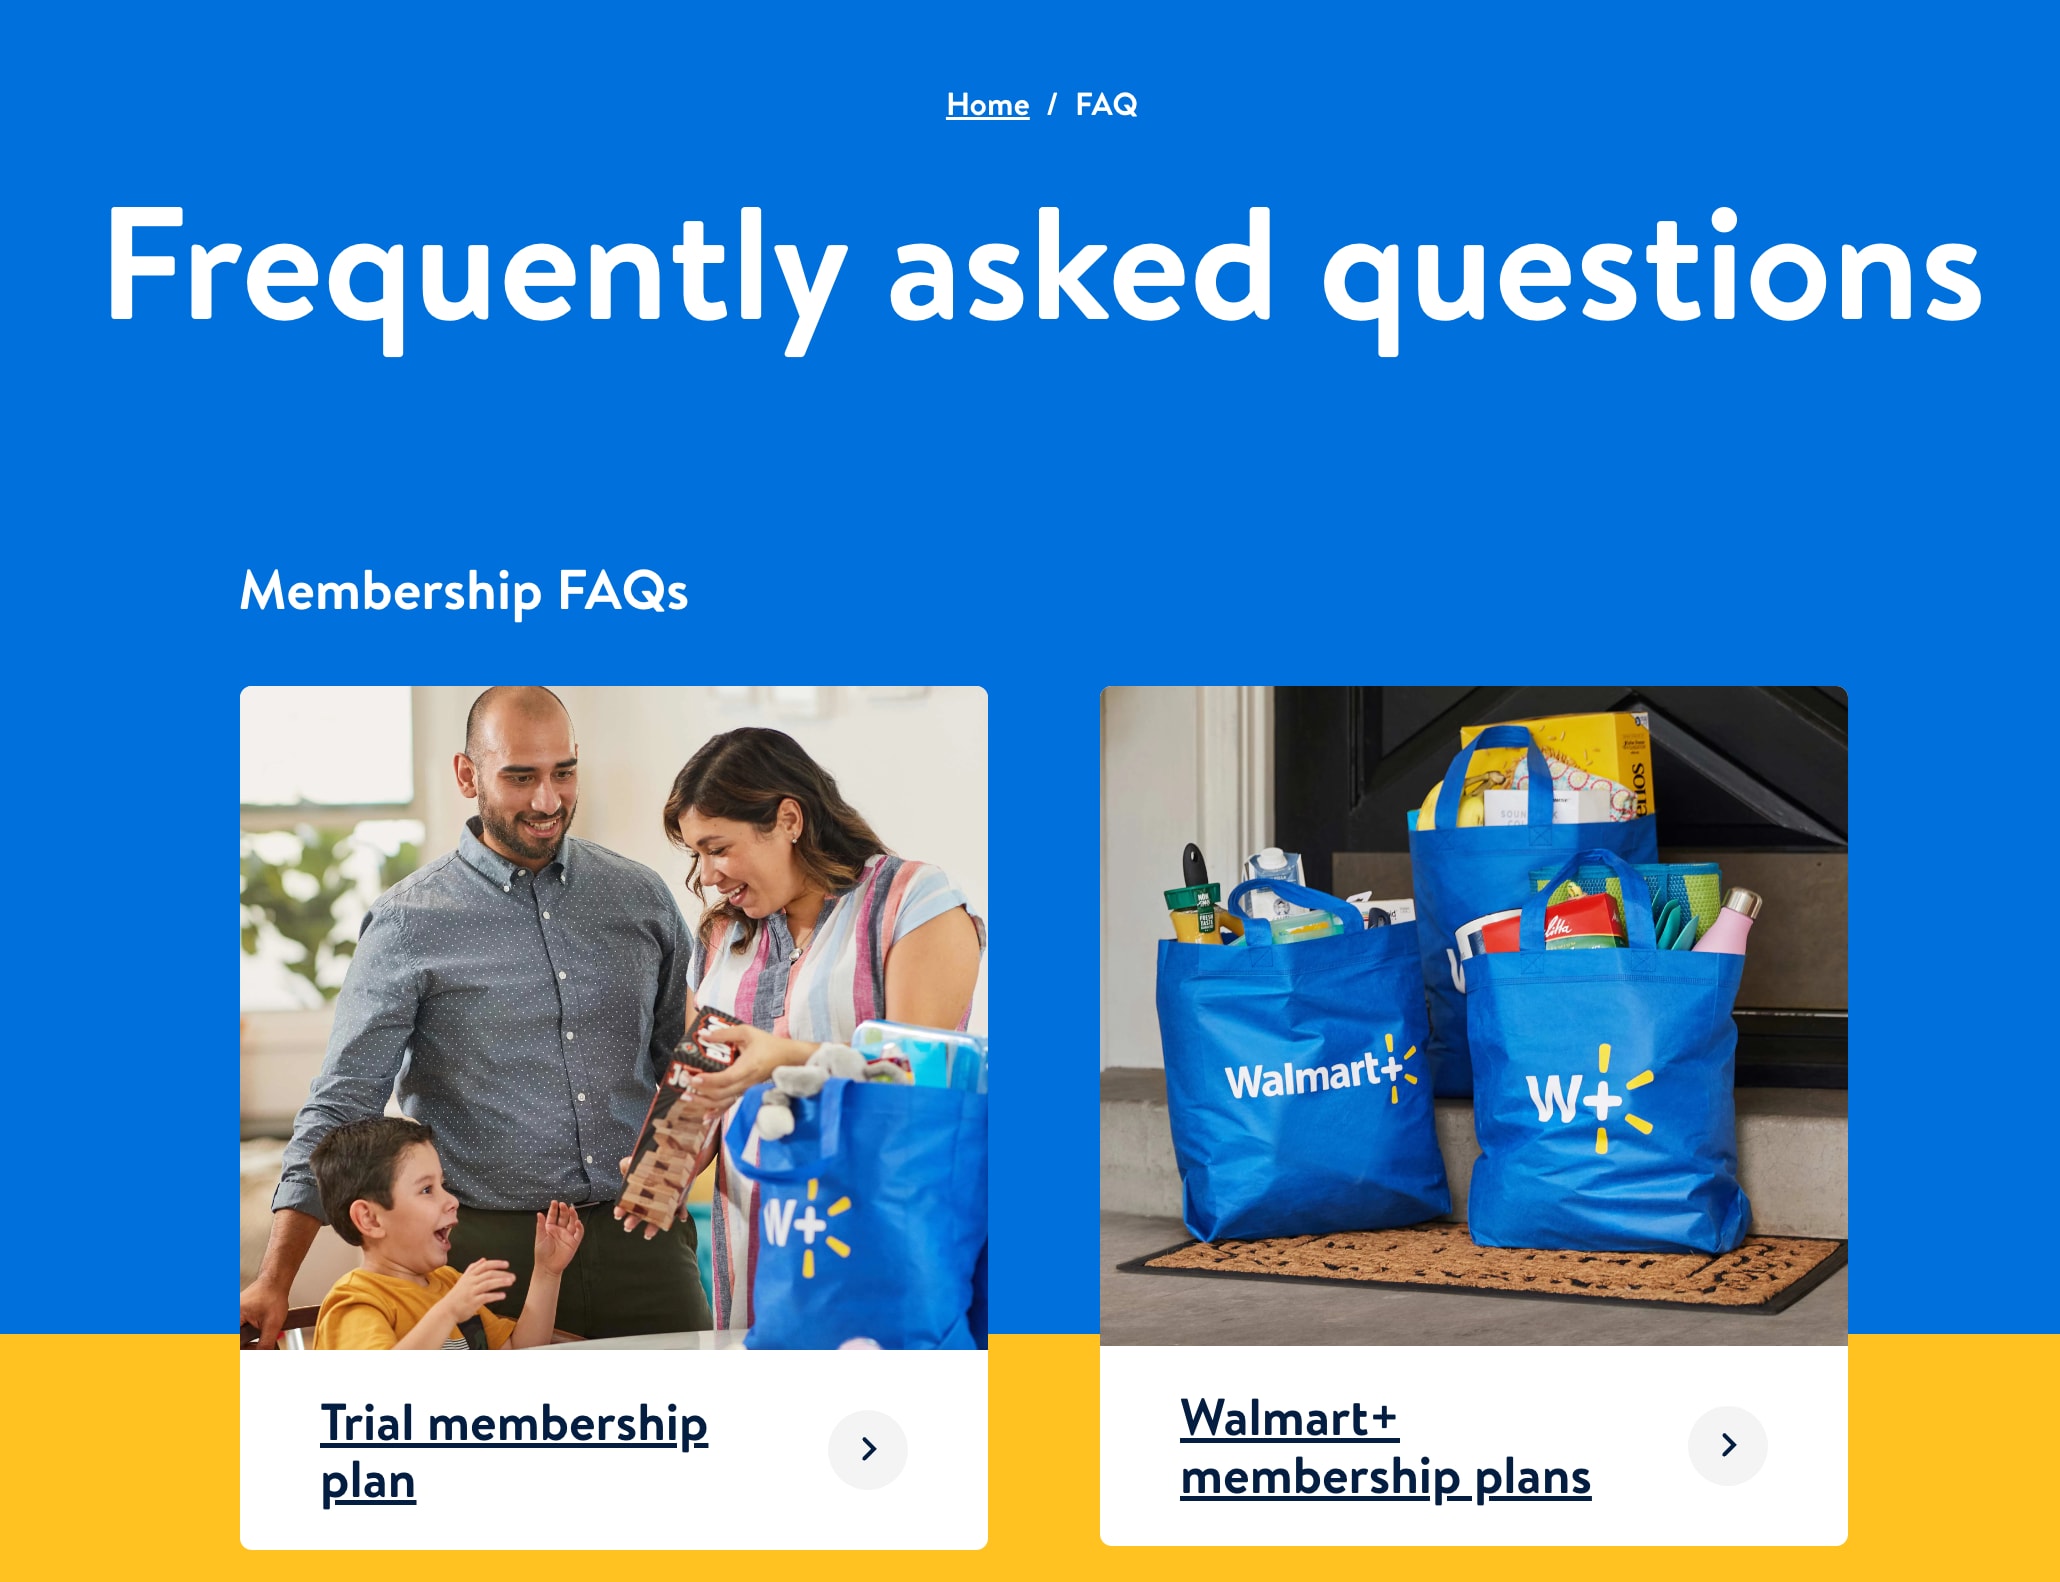 A screenshot of Walmart.com